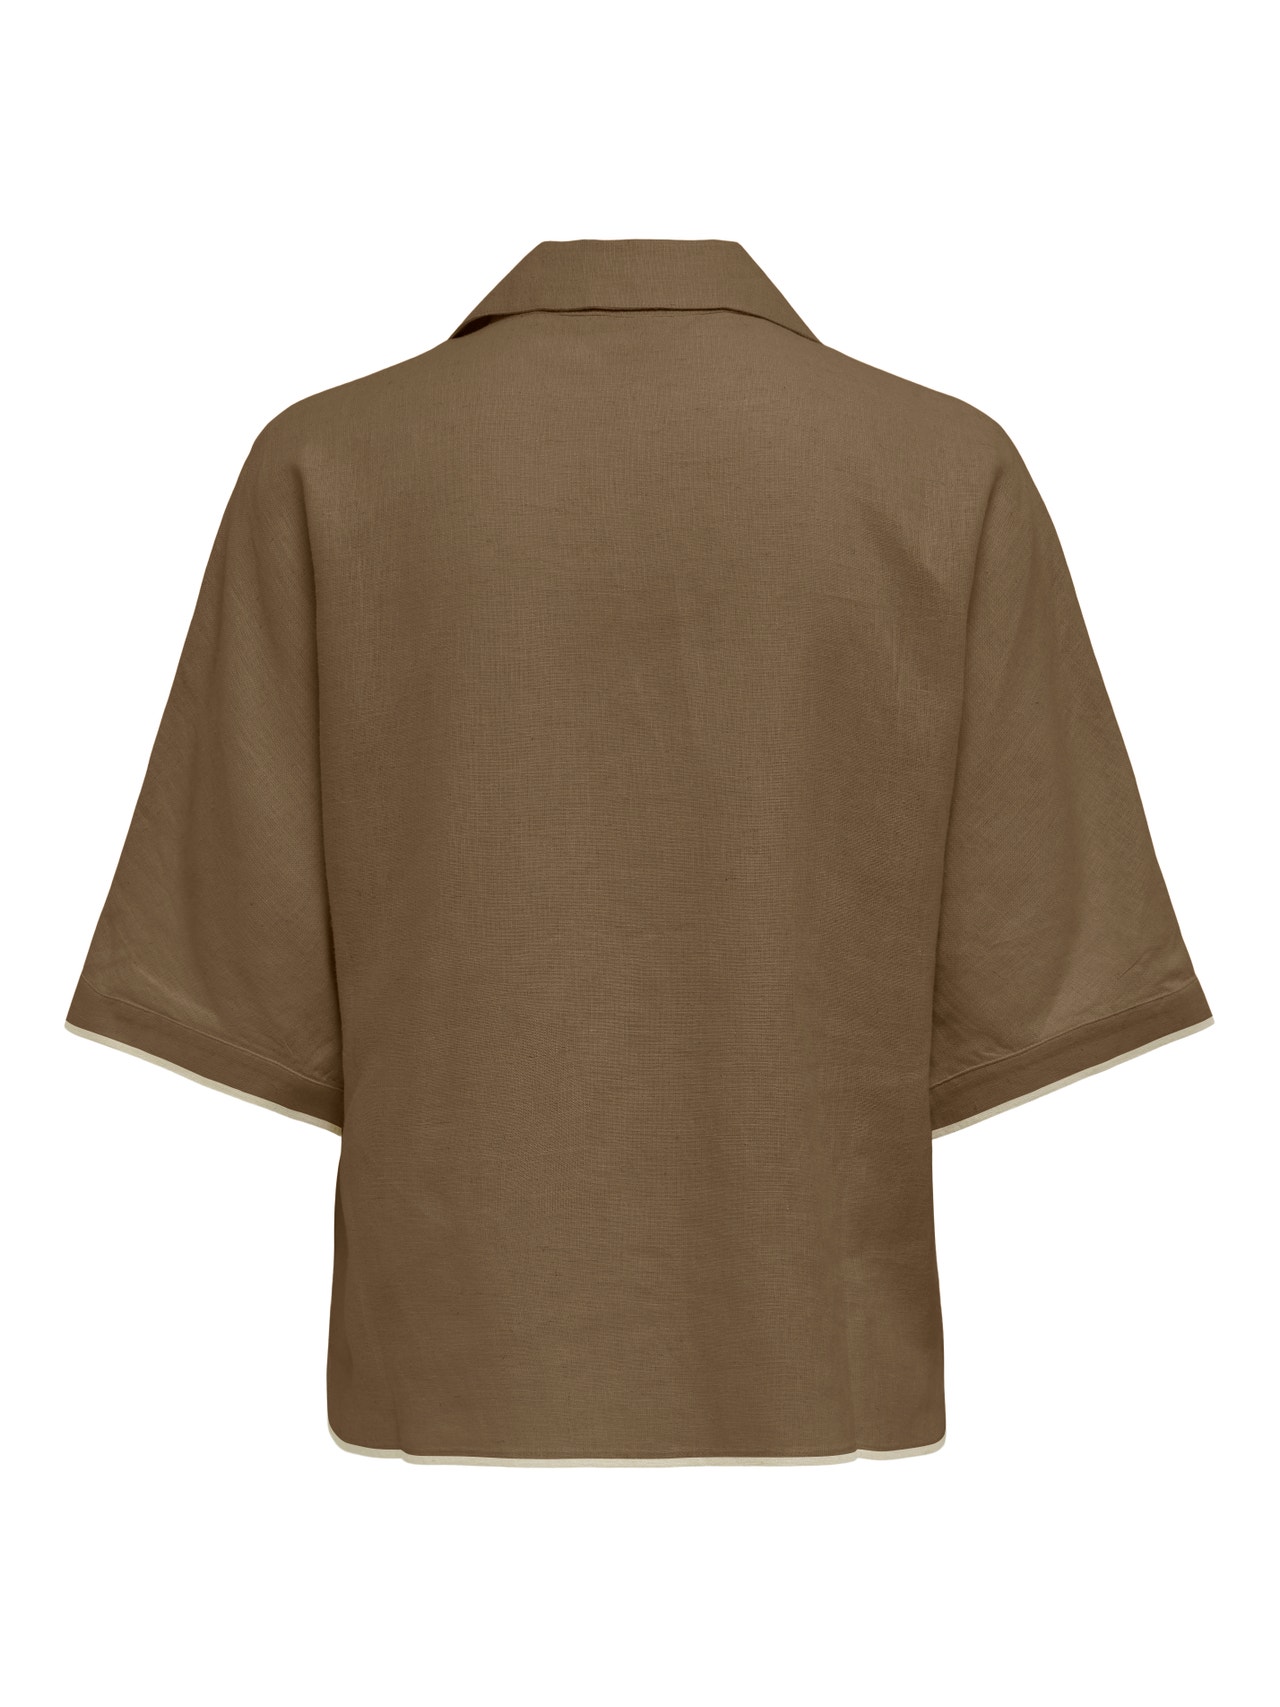 ONLY Camisas Corte regular Cuello de camisa Mangas voluminosas -Cub - 15314215